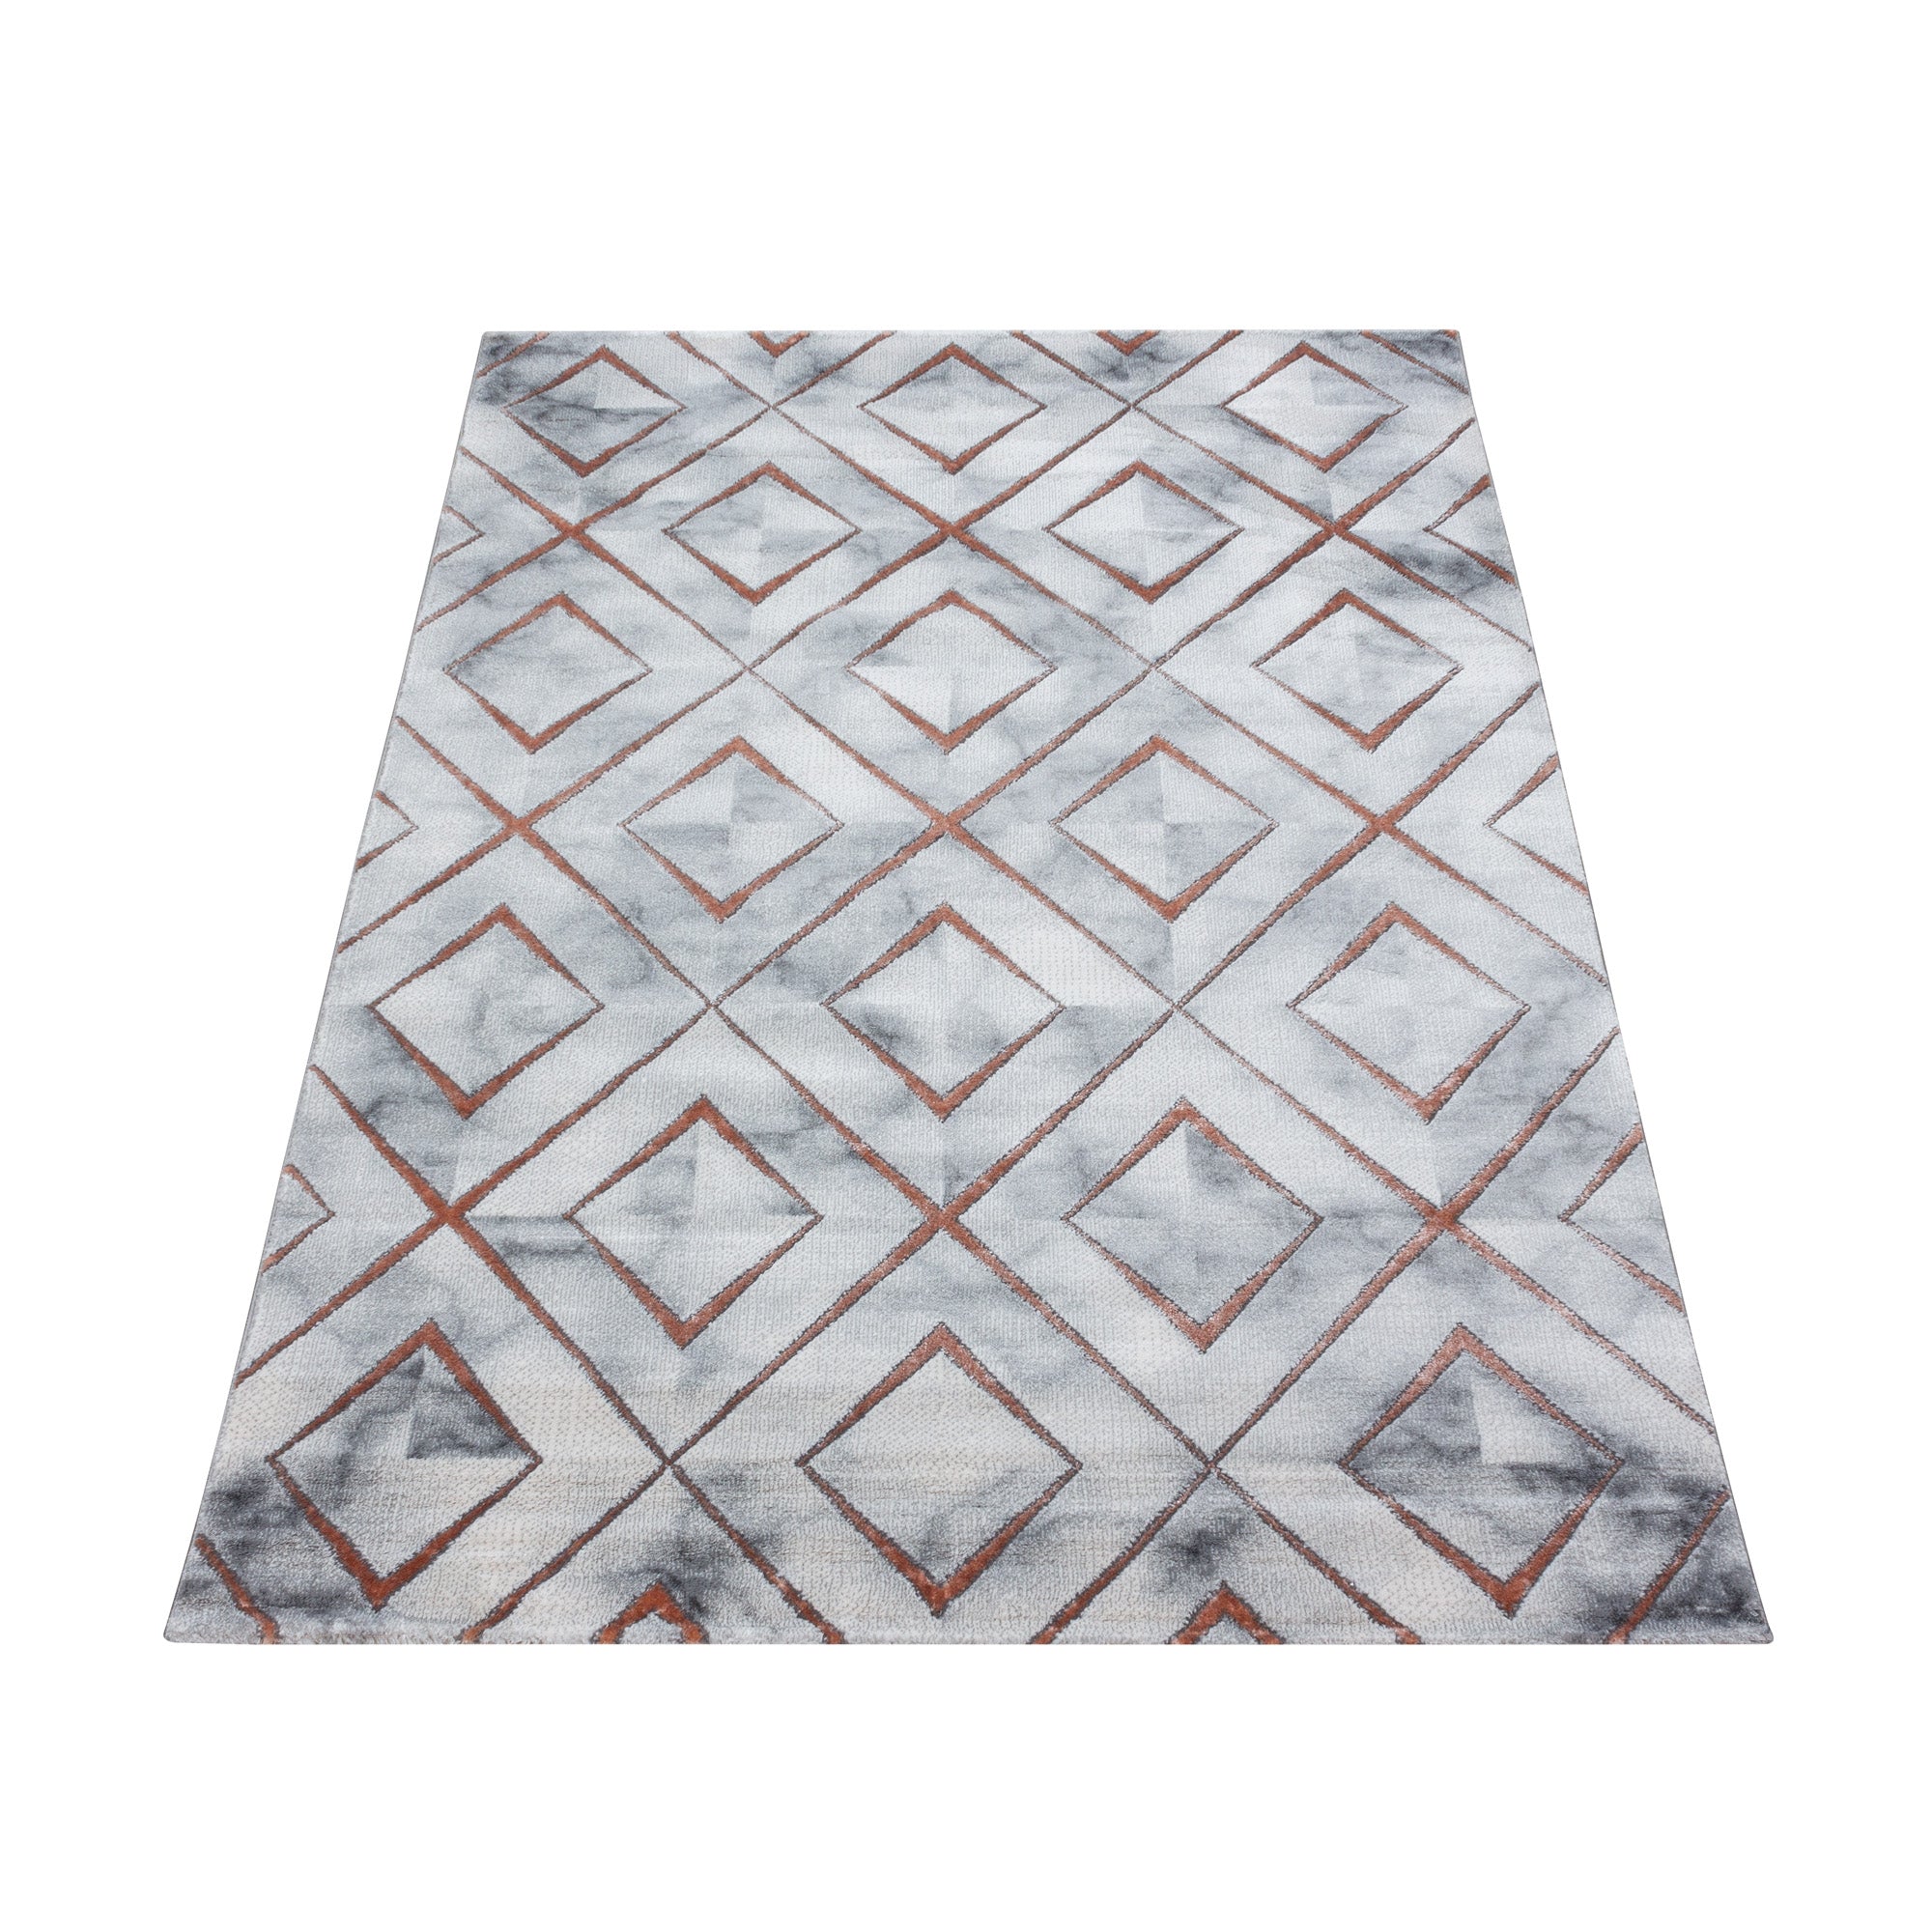 Tapis salon diamant design tapis aspect marbre style scandinave